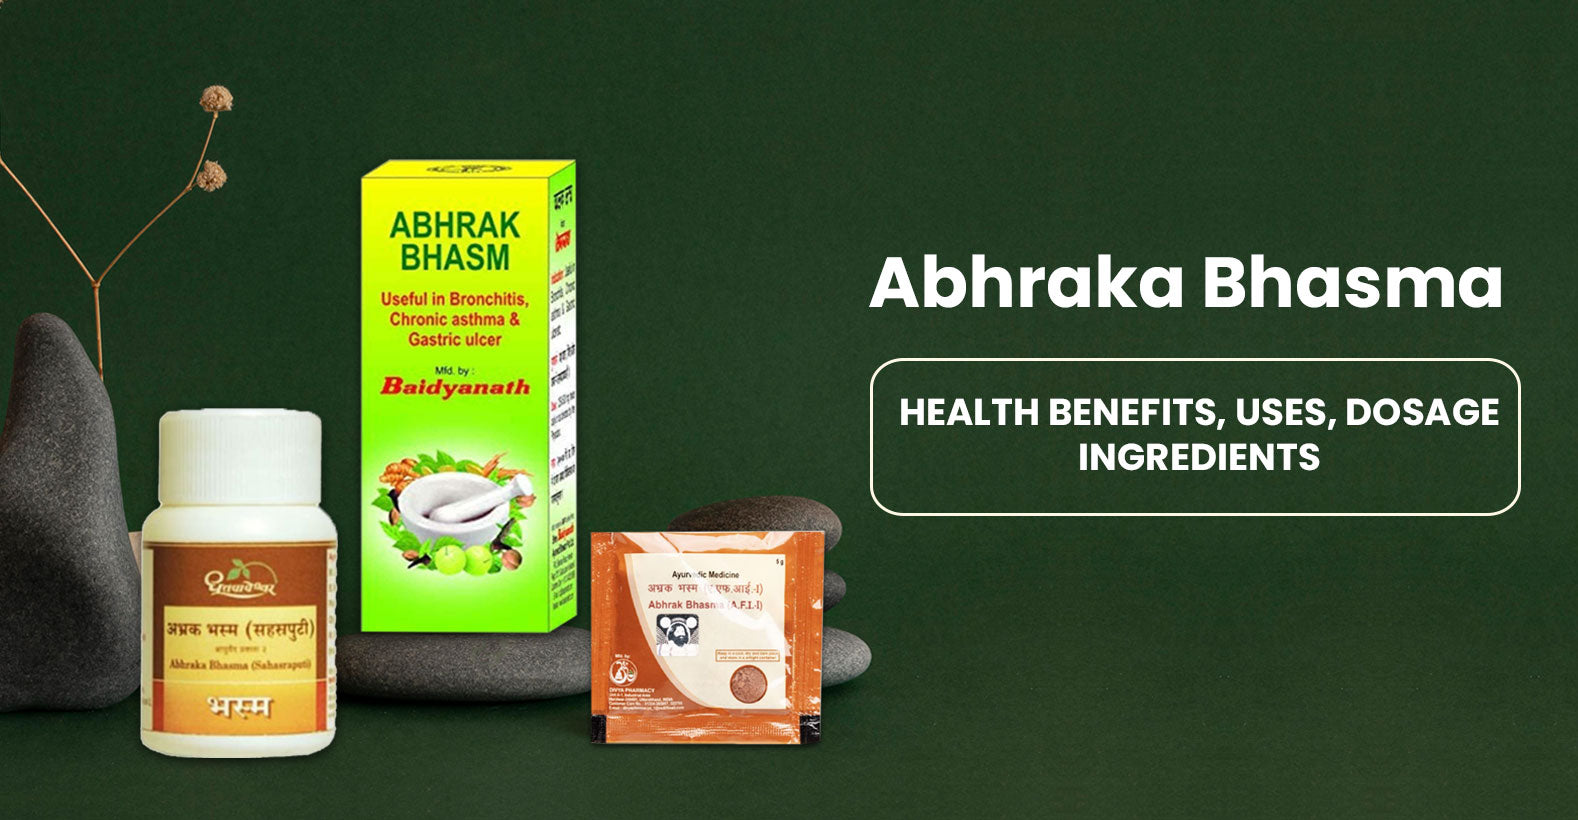 Abhrak Bhasma - Uses, Ingredients, Health Benefits, Properties, Dosage